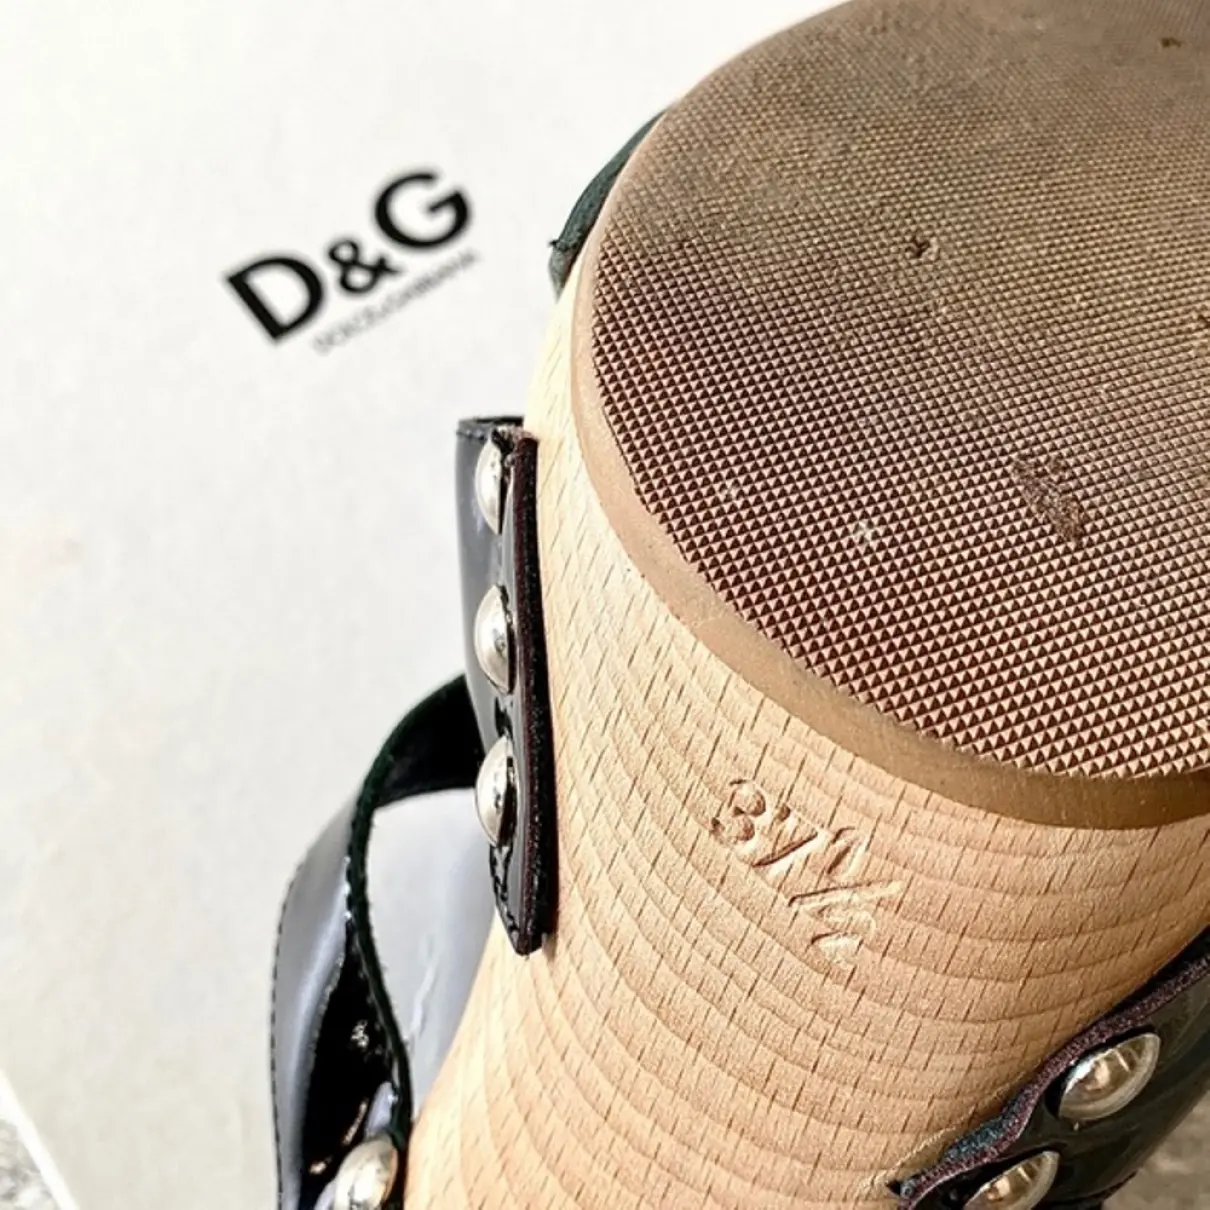 Buy D&G Patent leather sandals online